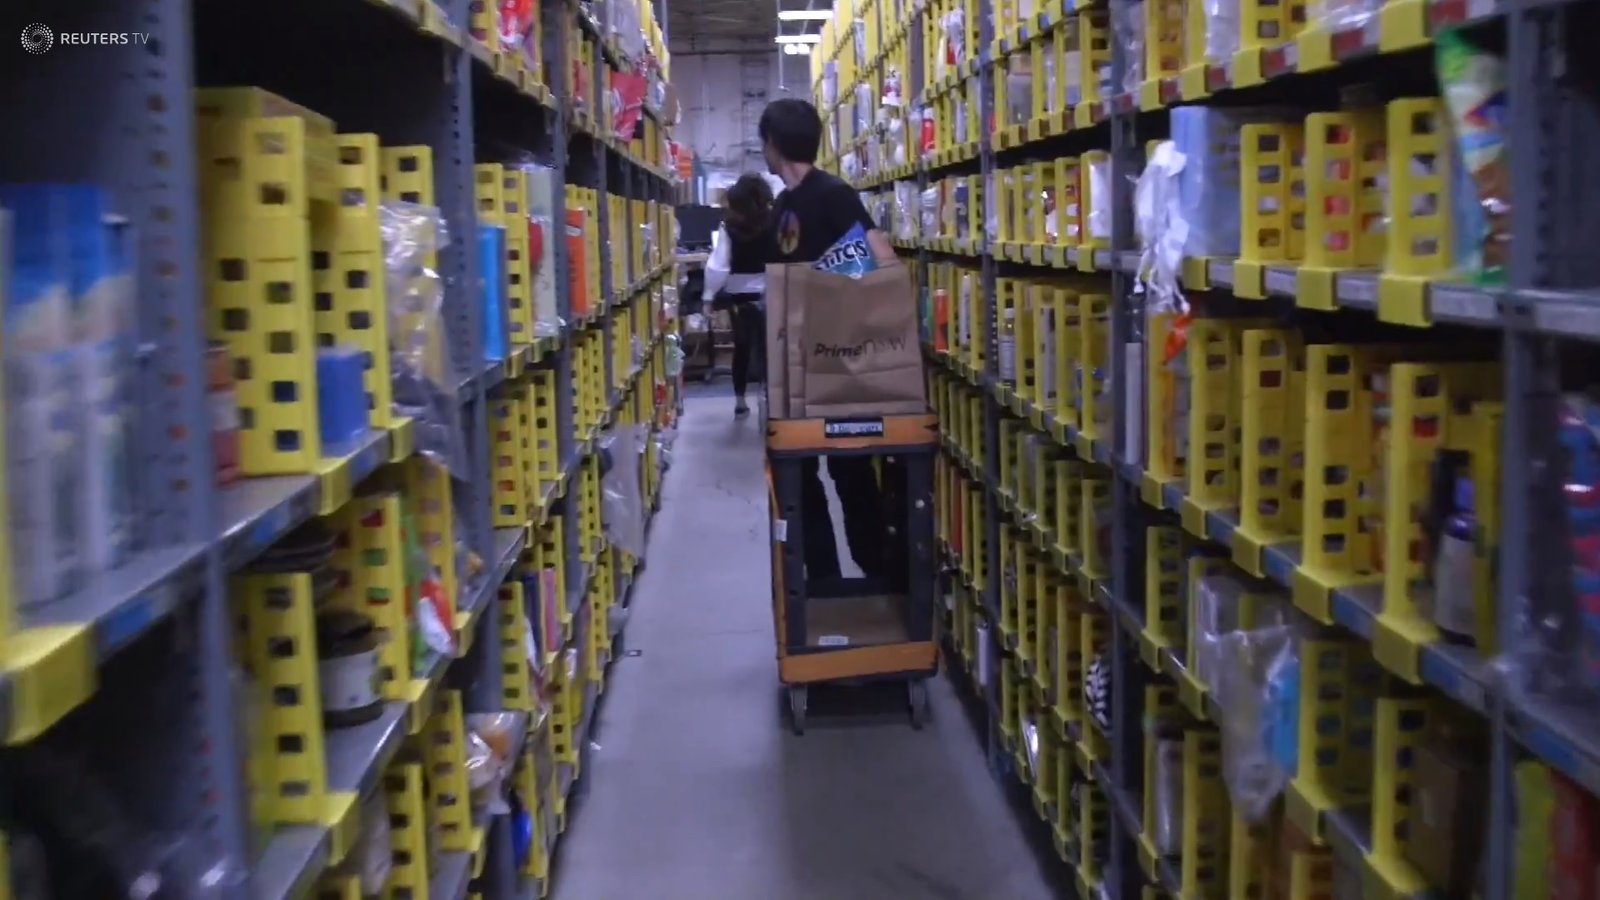 Man running through shelves to fulfill orders.